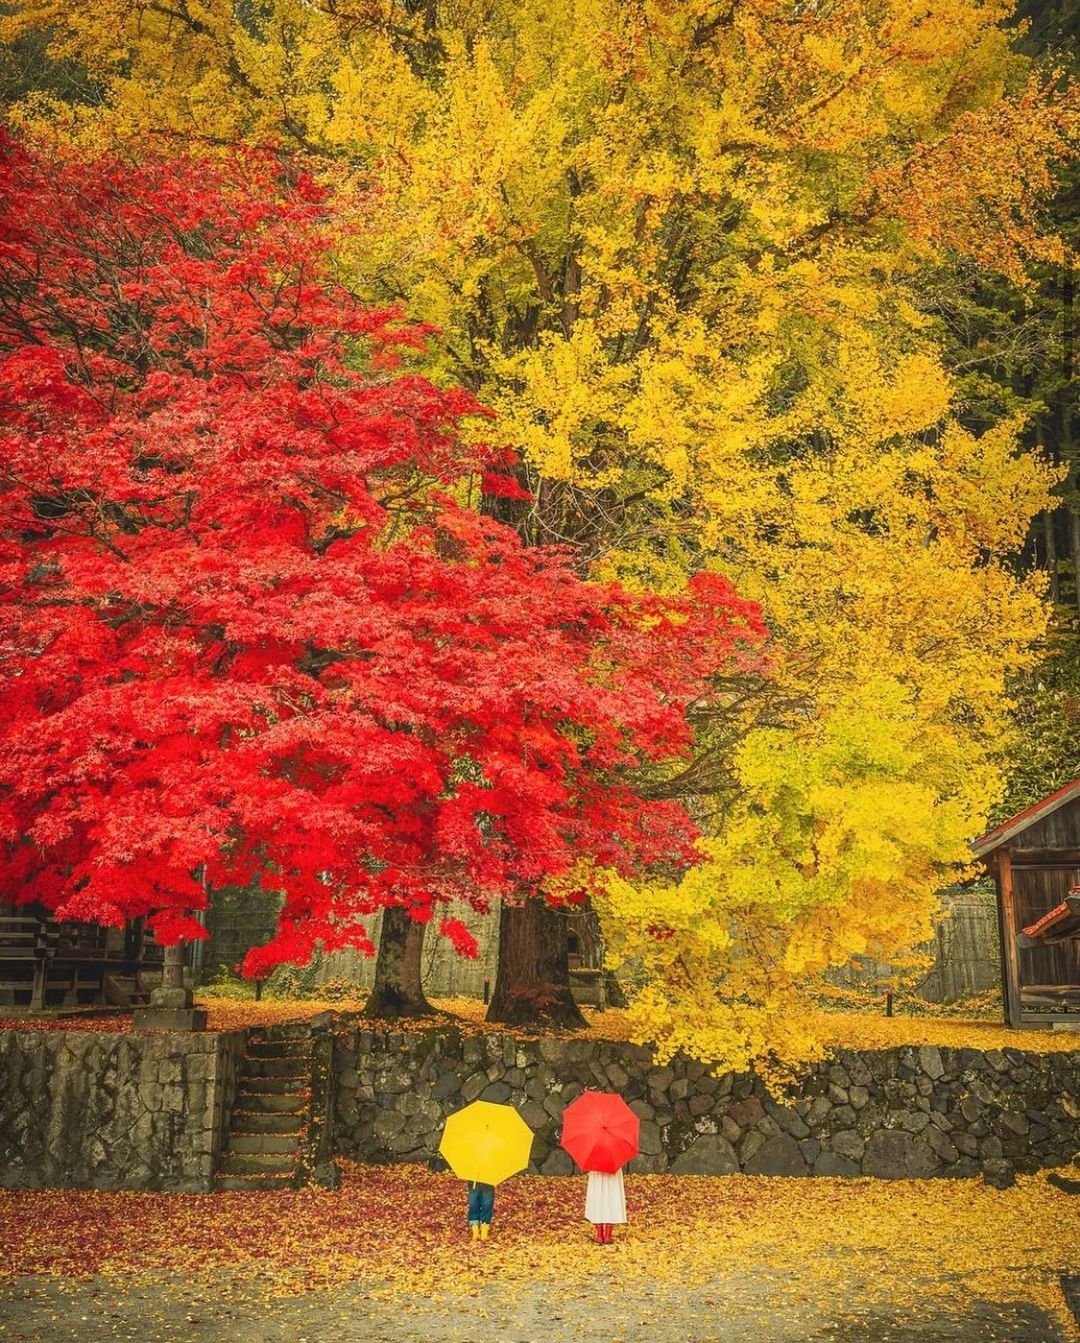 Retrip Nippon Retrip 岡山 本日ご紹介するのは 徳山神社 の紅葉の様子です 蒜山の隠れた紅葉スポット 紅葉と銀杏の紅葉を楽しむことができ 赤と黄色のコントラストは Wacoca Japan People Life Style